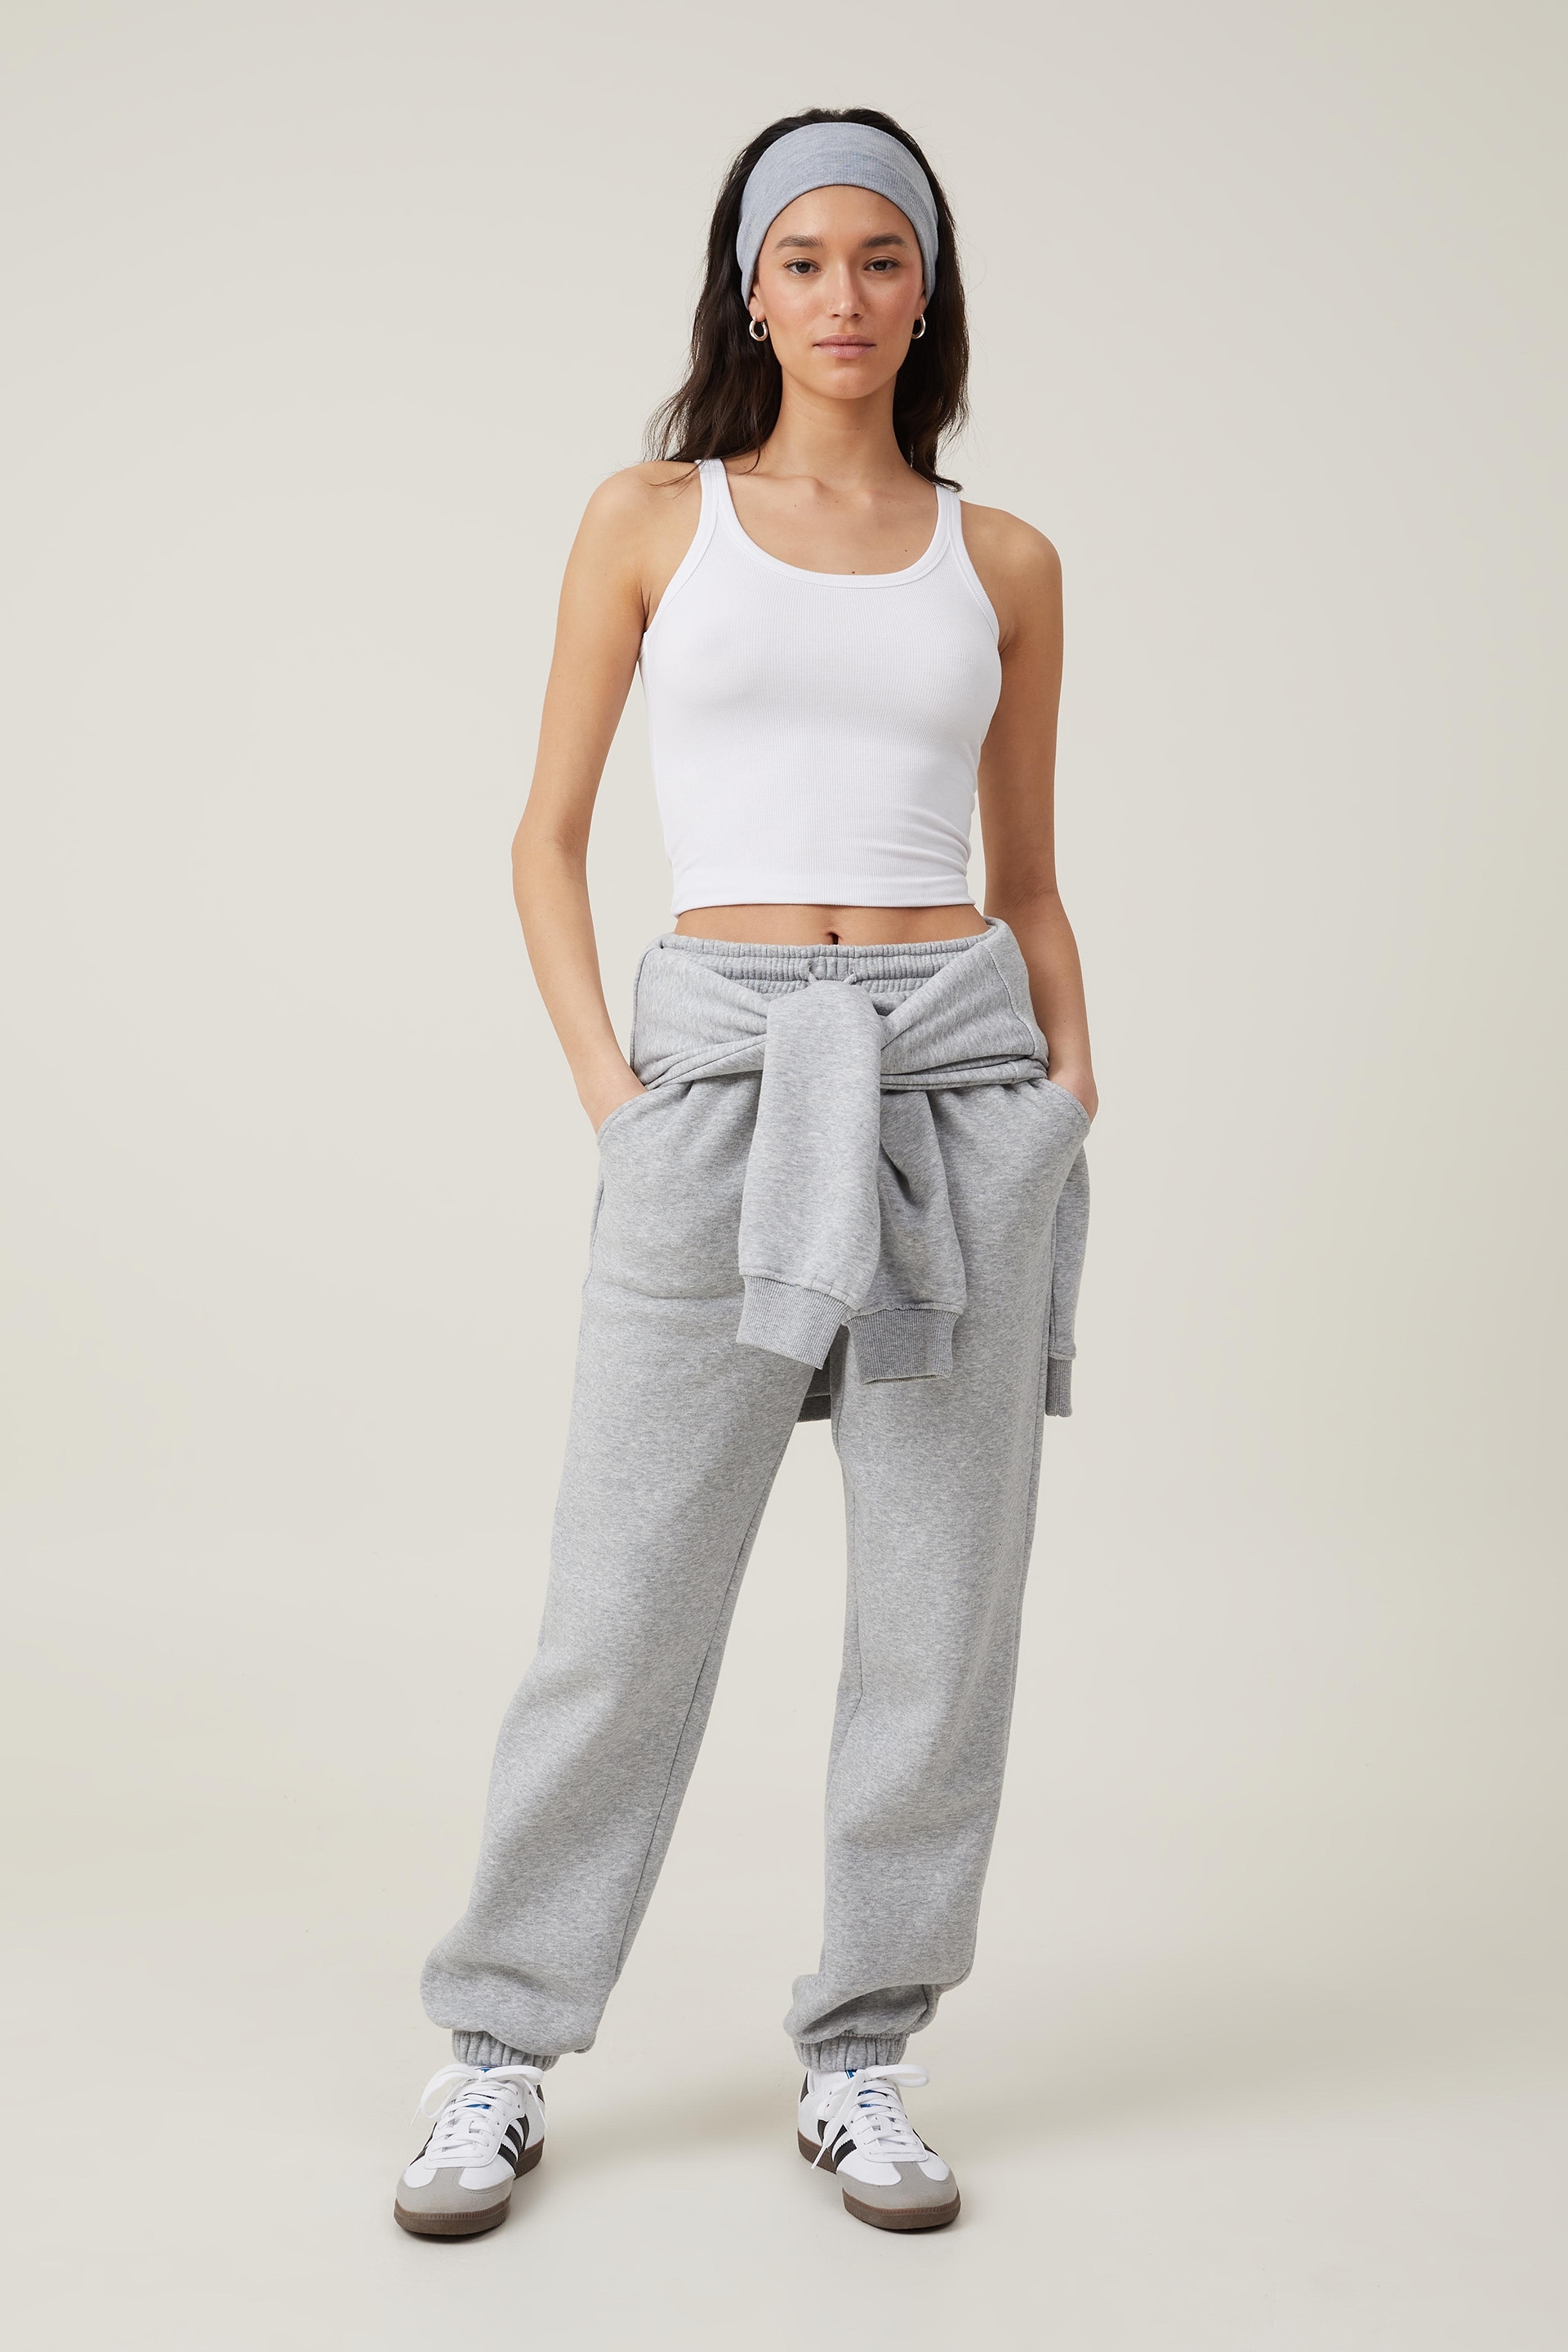 Cotton On Women - Classic Fleece Sweatpant - Grey marle